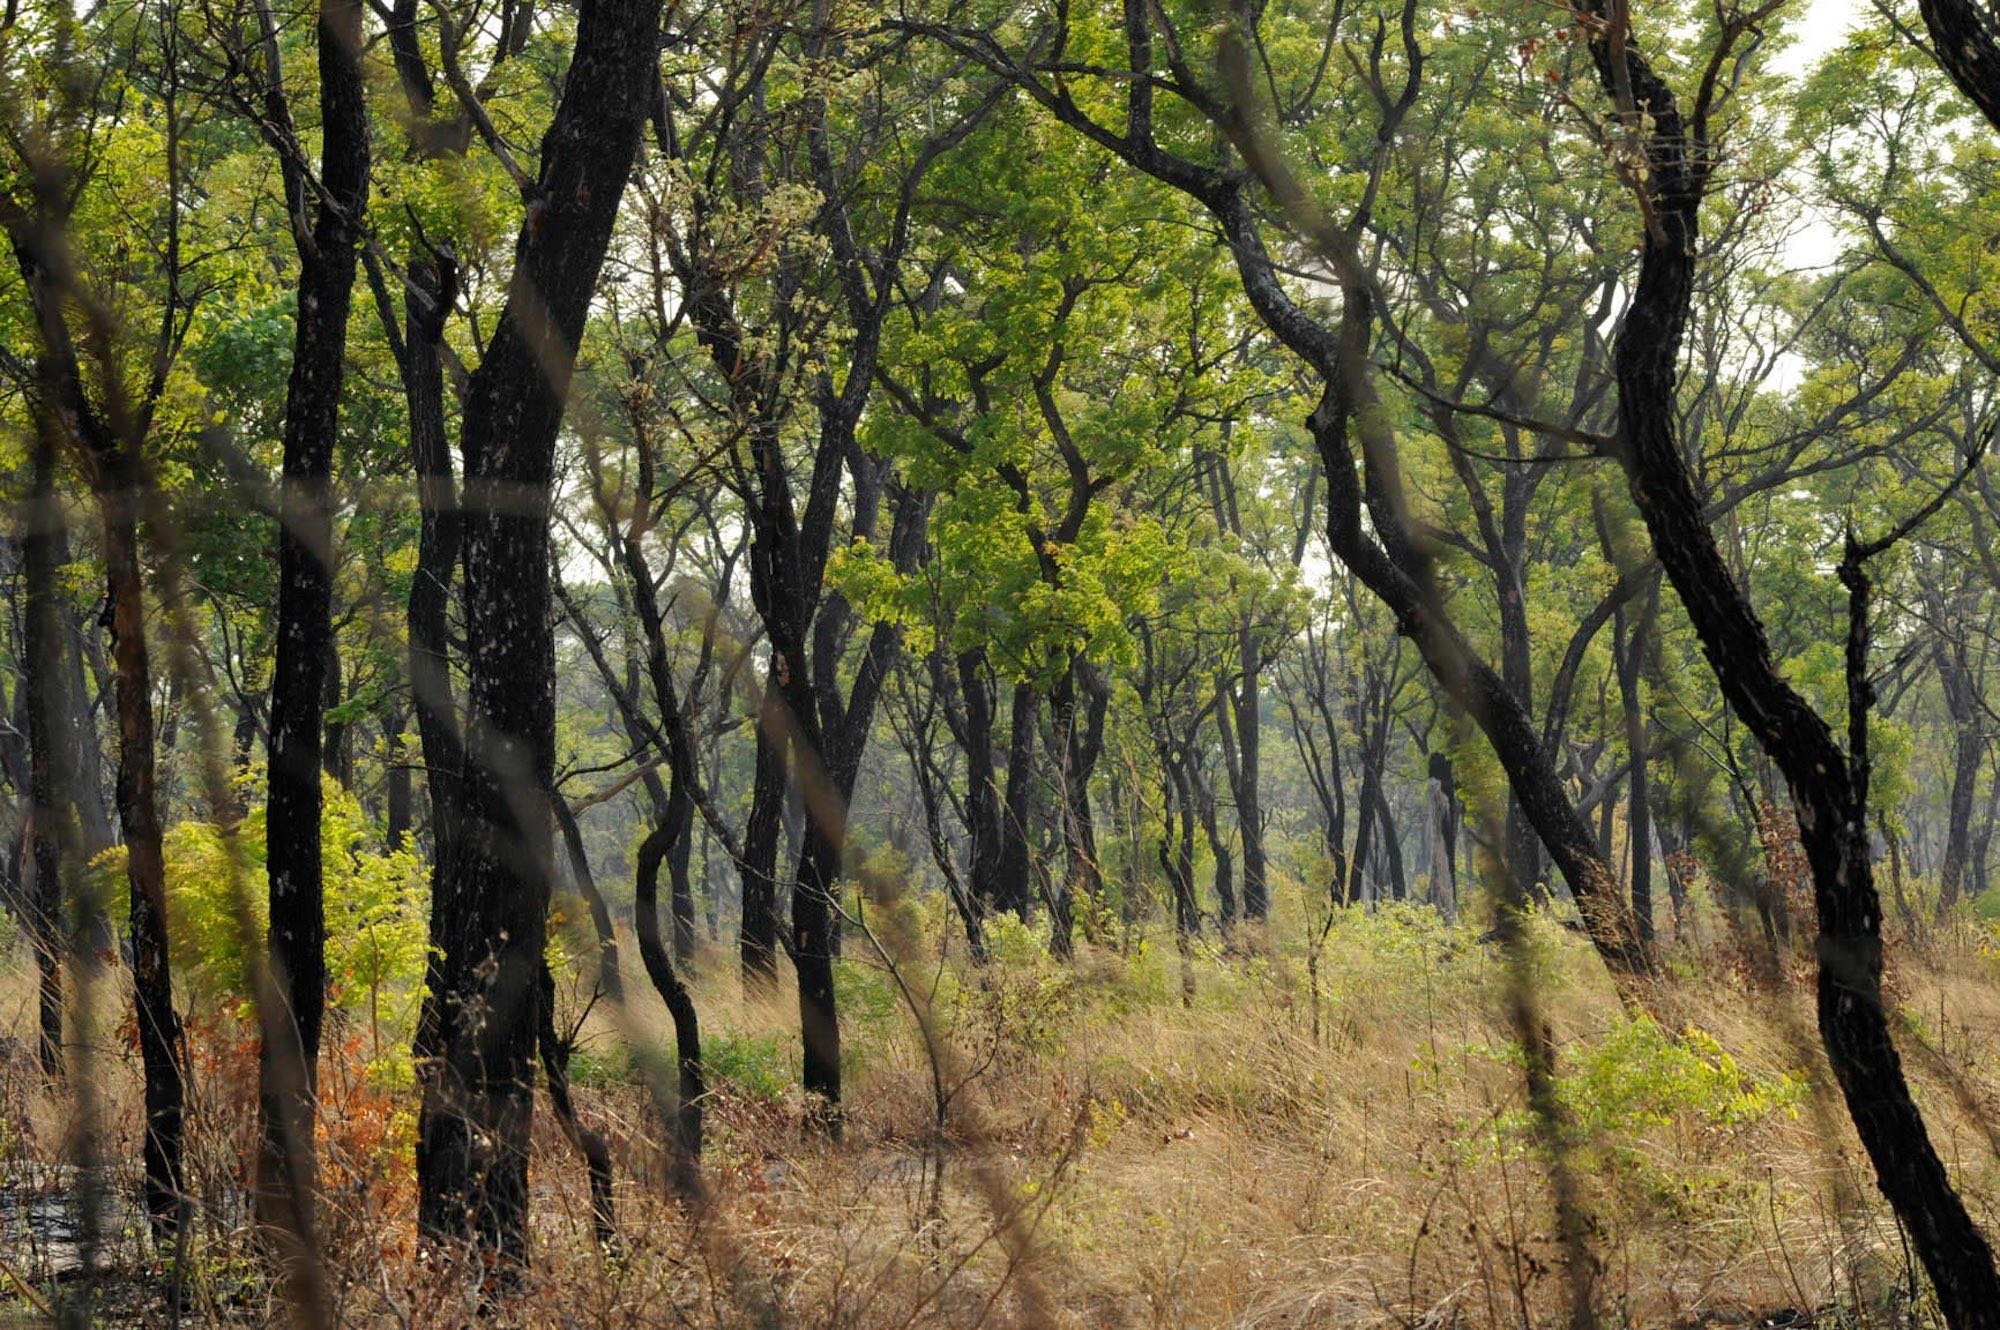 A dense woodland of miombo trees.